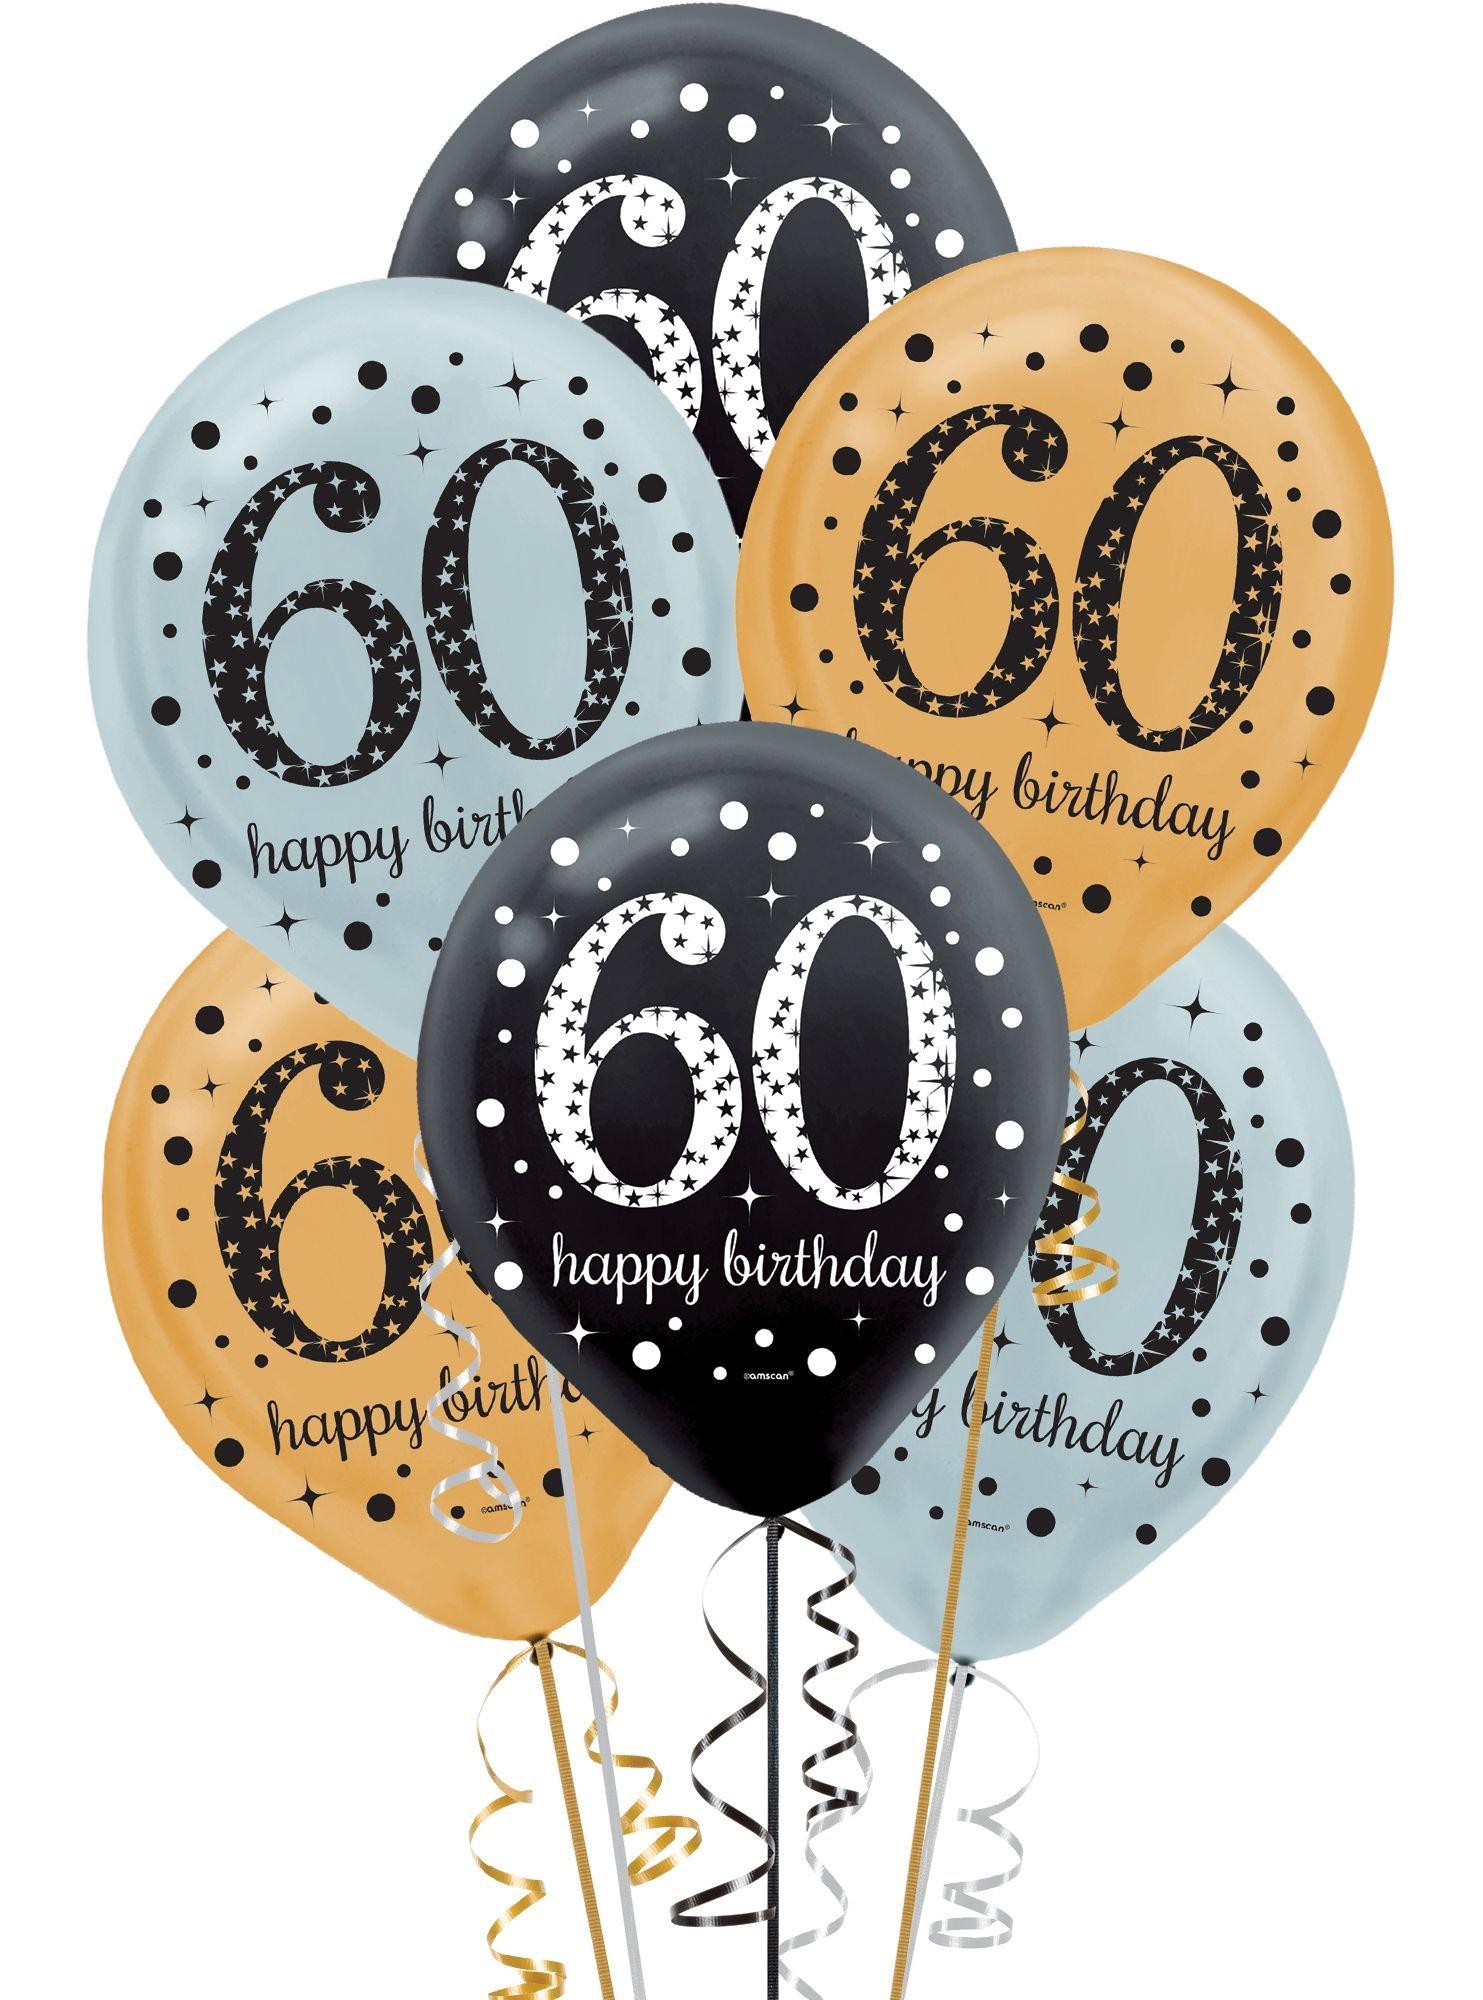 15ct, 60th Birthday Balloons - Sparkling Celebration